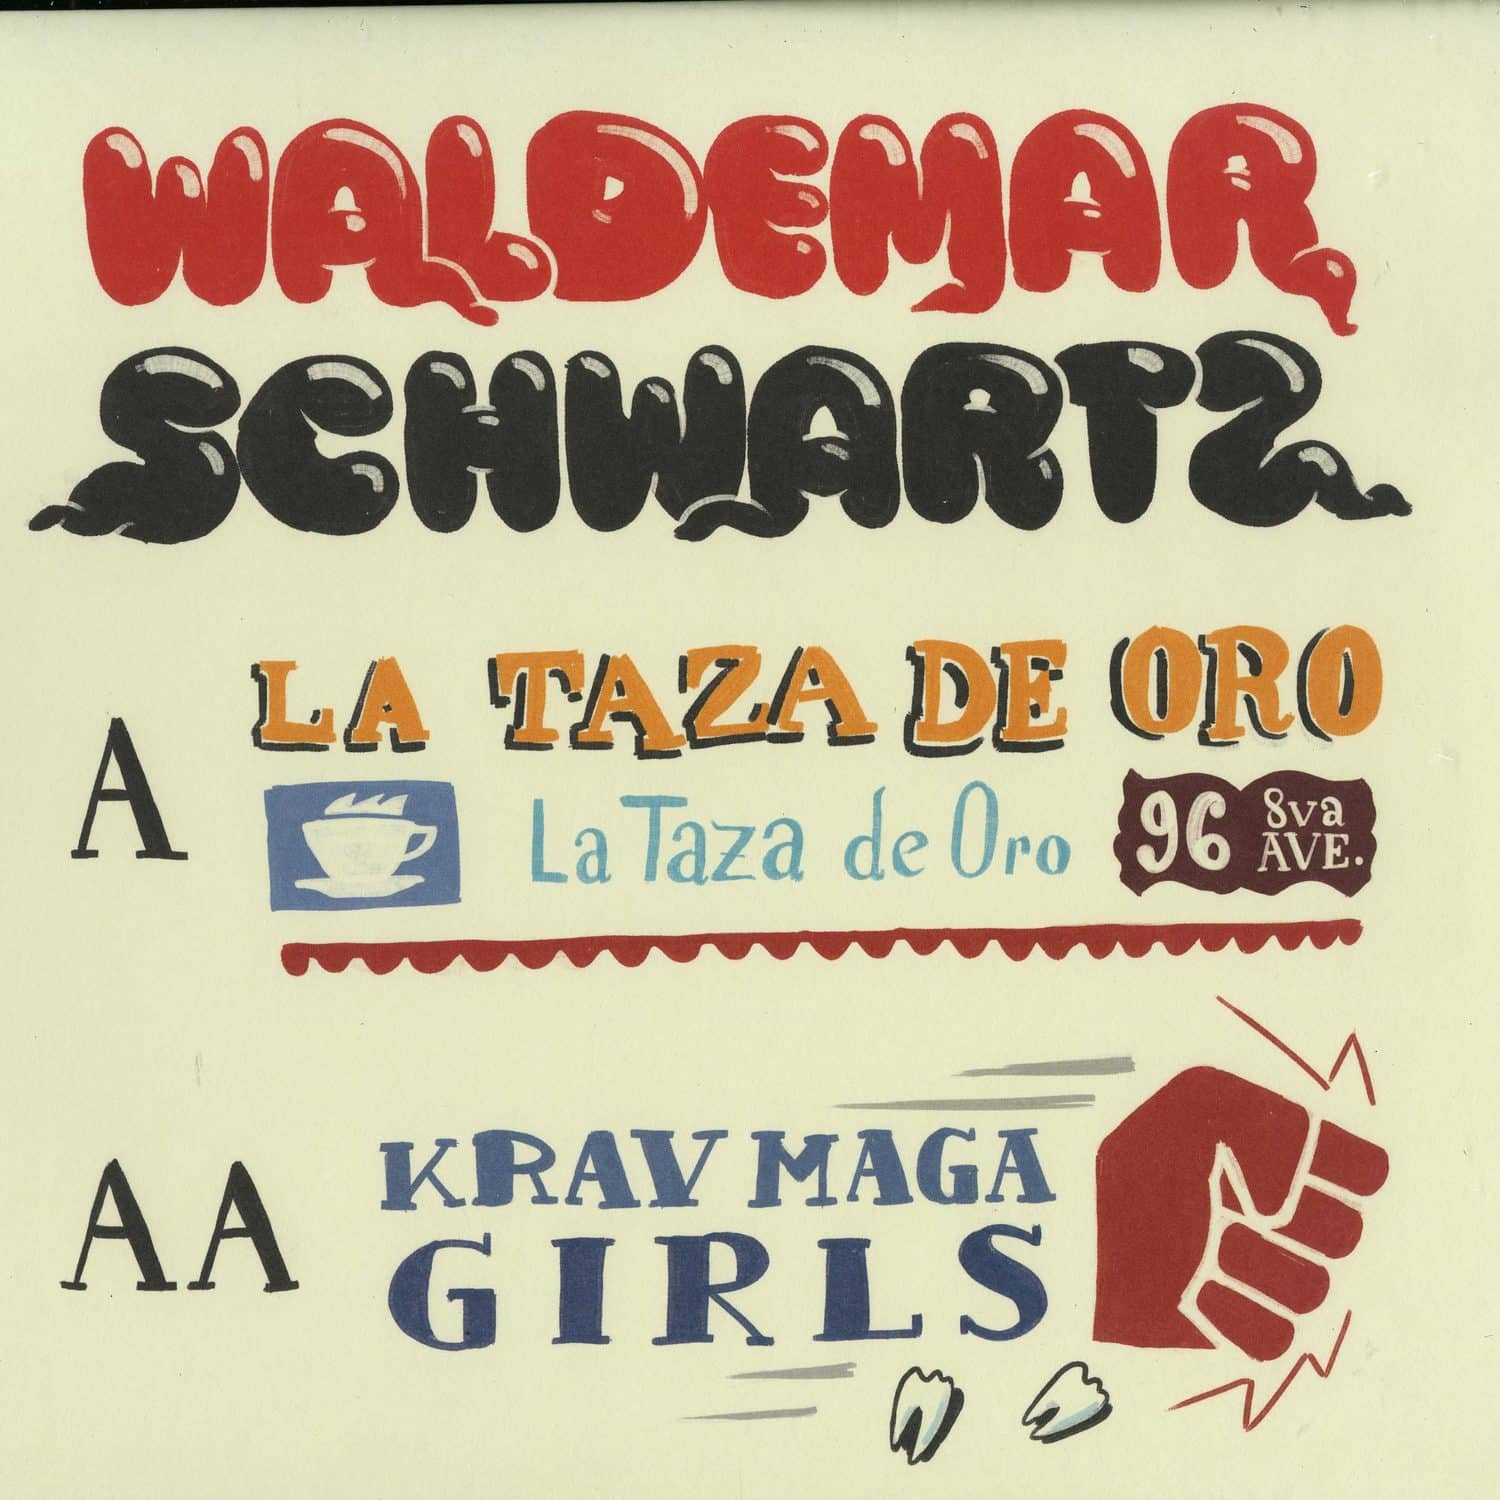 Waldemar Schwarz - LA TAZA DE ORO / KRAV MAGA GIRLS